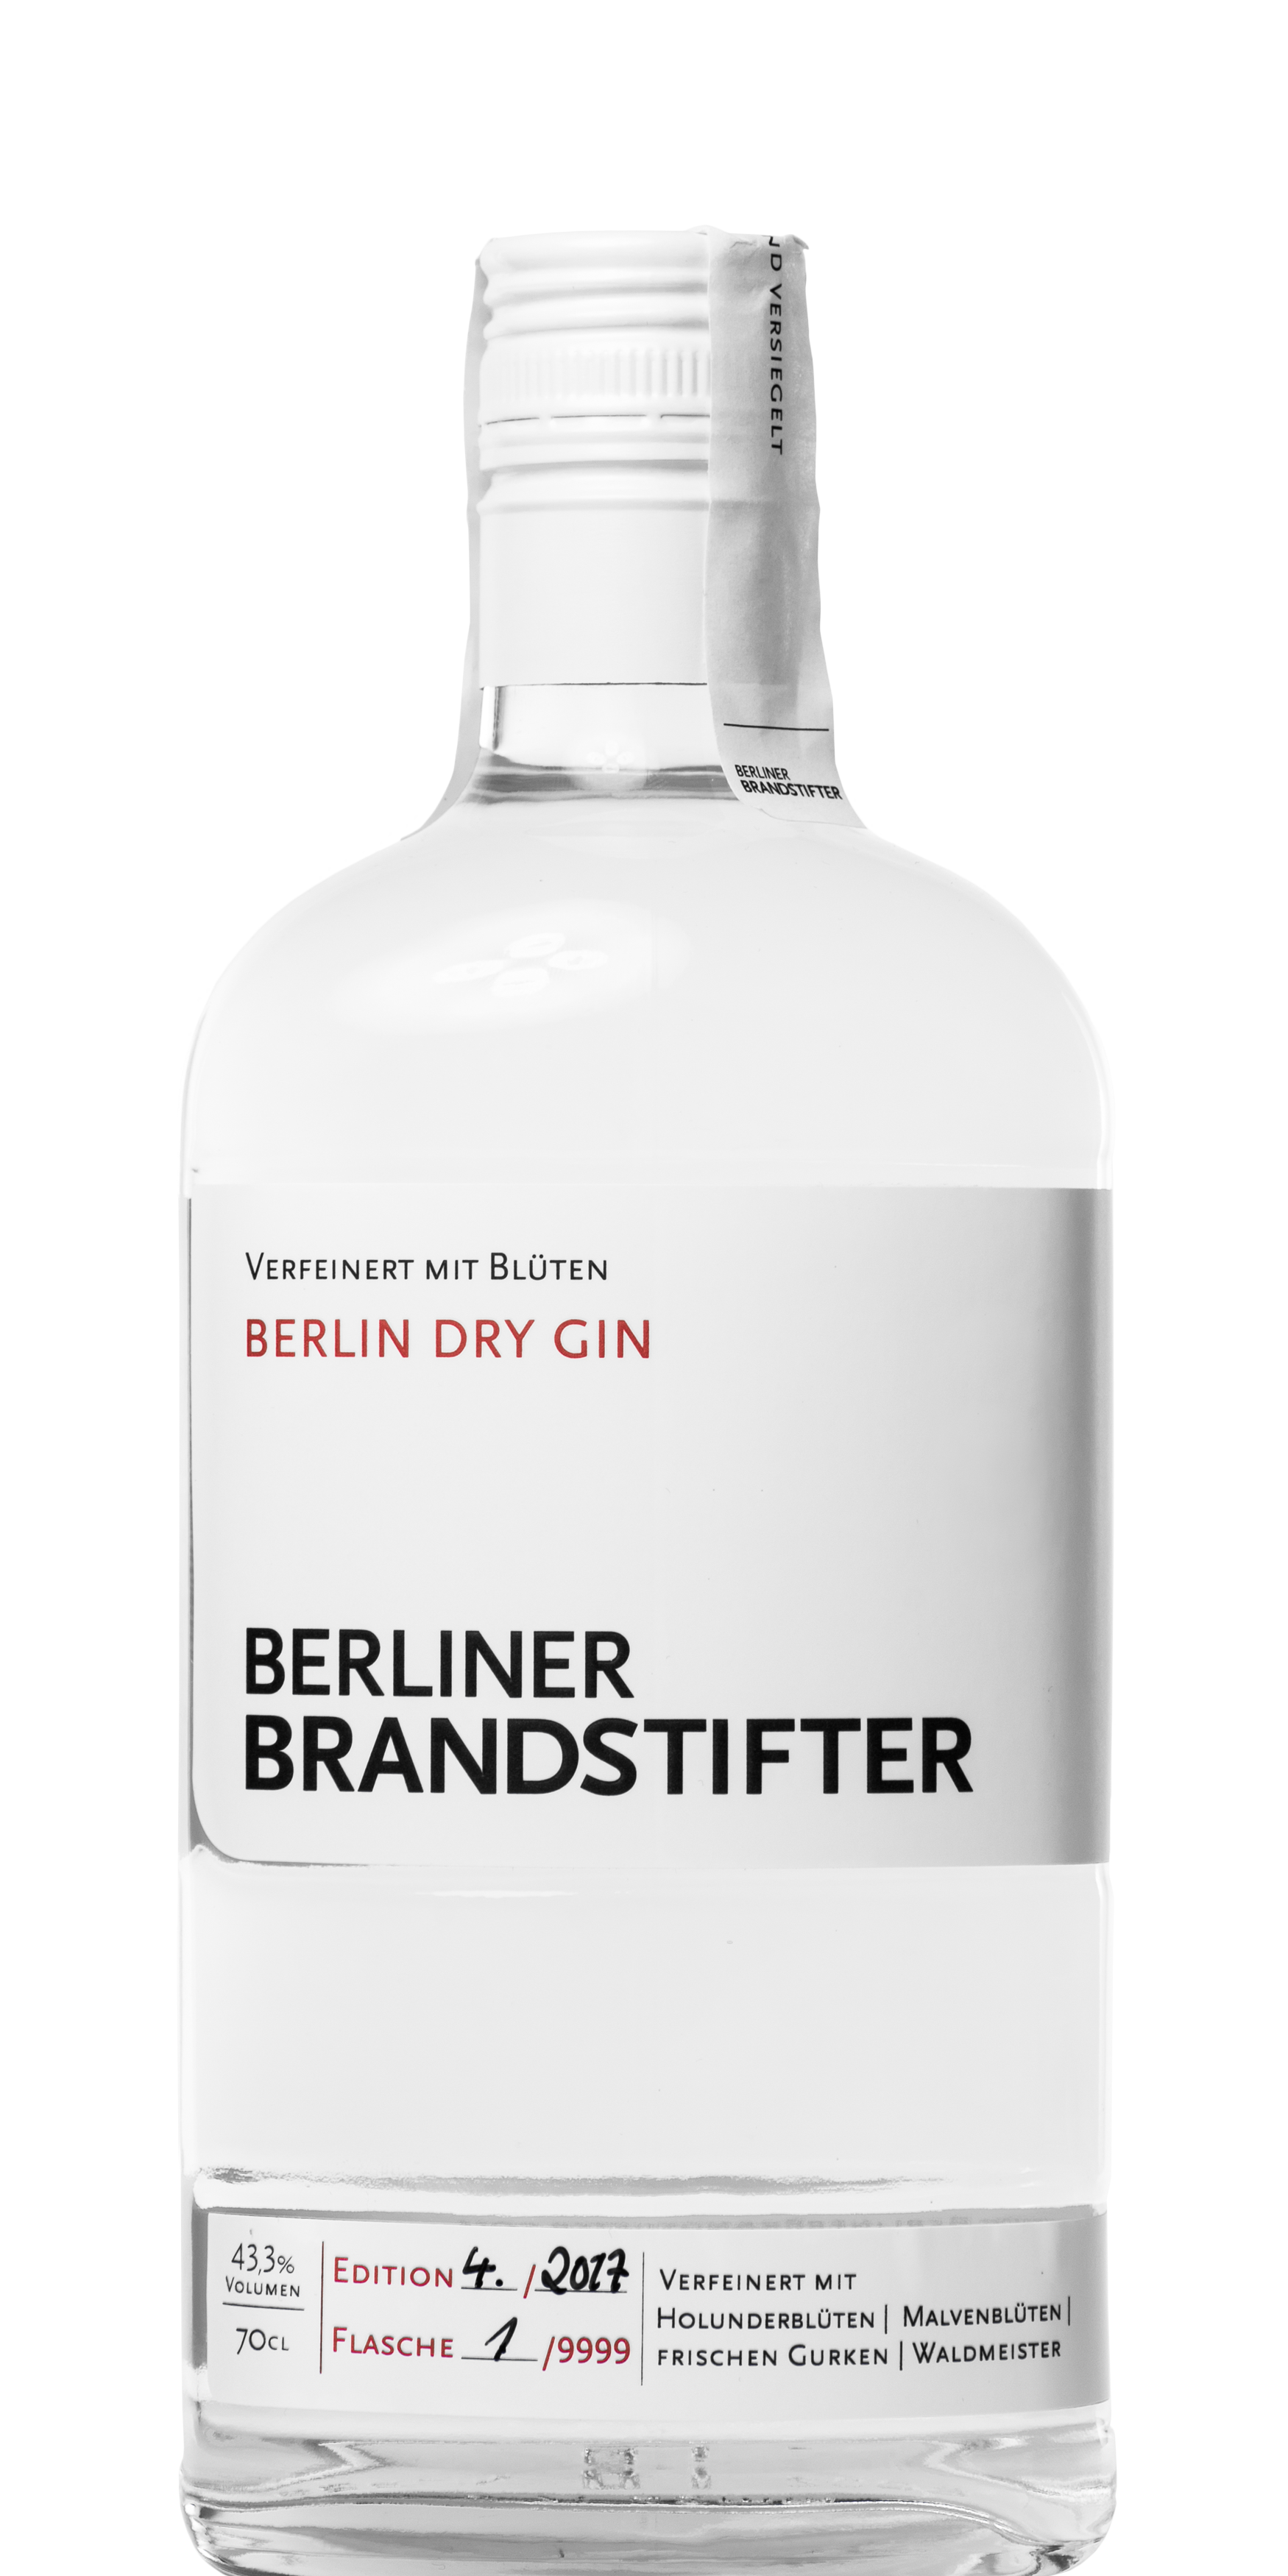 Berliner-Brandstfiter-Berlin-Dry-Gin-700ml.png